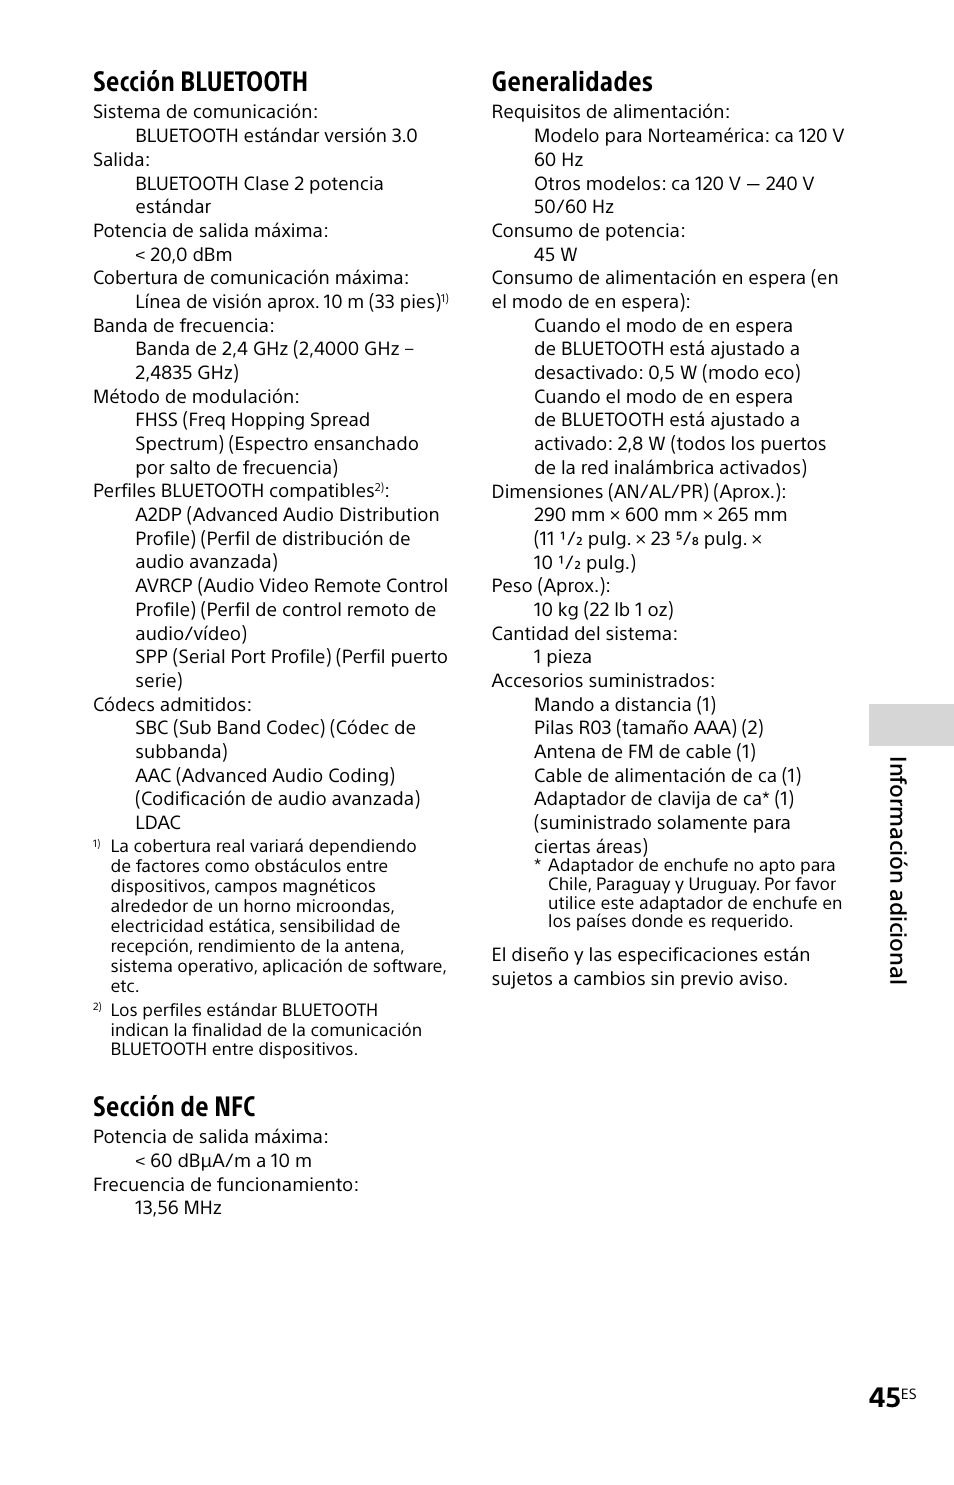 Sección, Sección bluetooth, Sección de nfc | Generalidades, Inf ormación adicional | Sony MHC-V11 Benutzerhandbuch | Seite 89 / 263